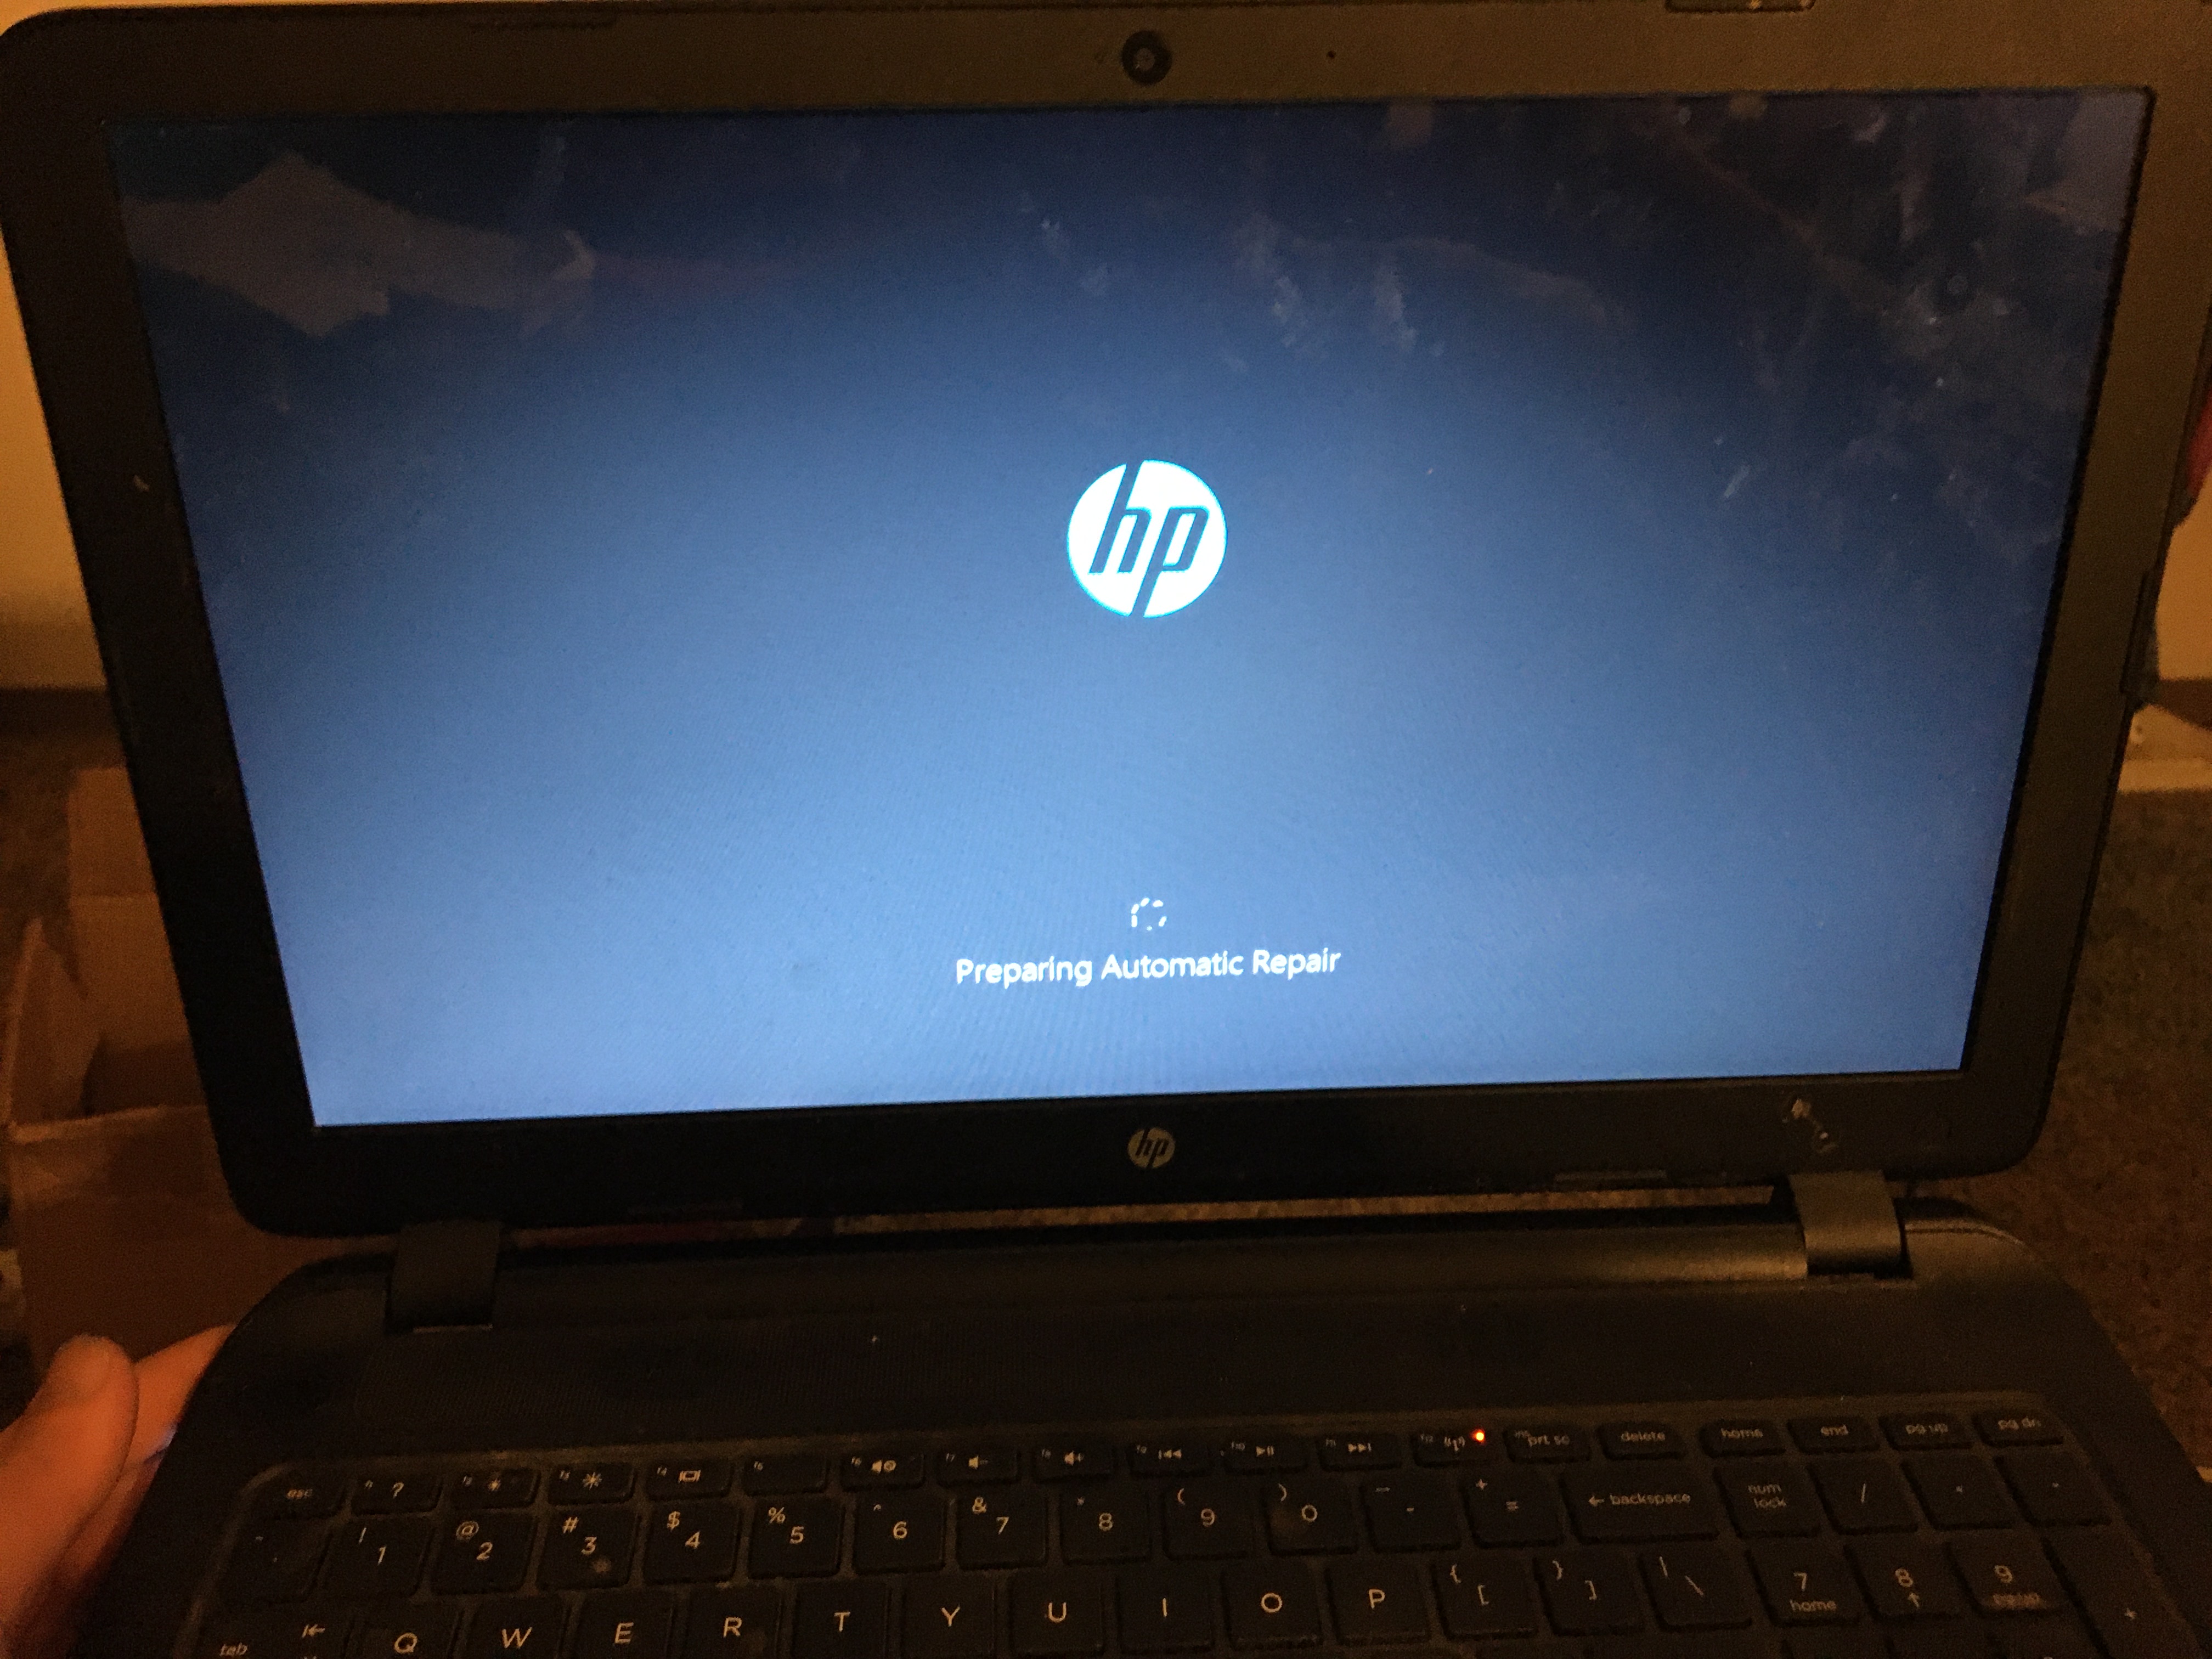 Stuck on preparing automatic repair screen - HP Support Community - 7494269